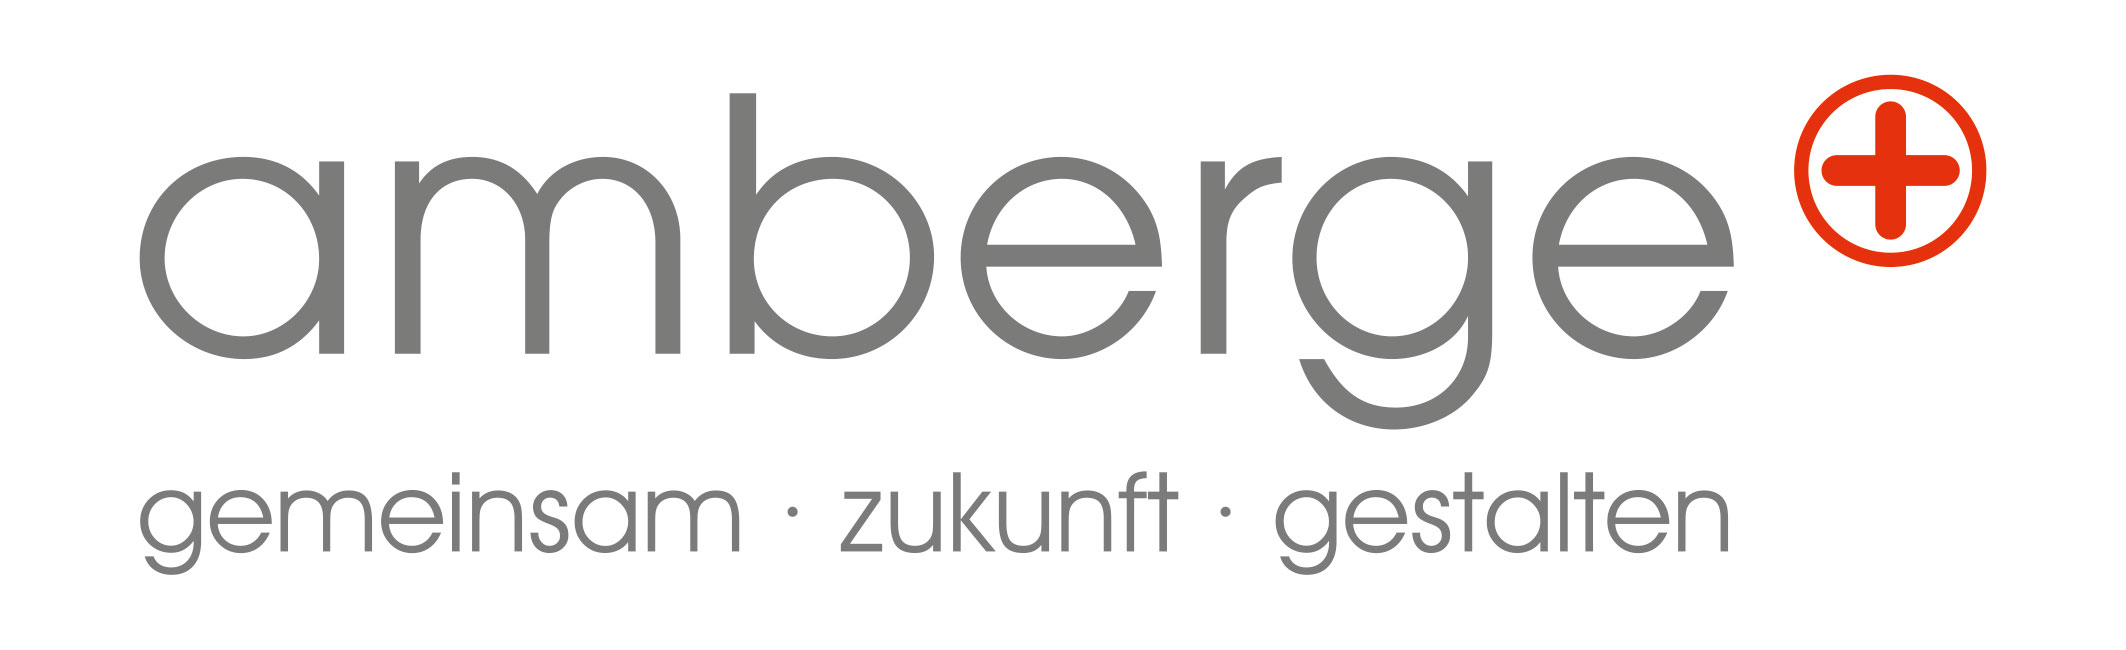 WP / Stb Andreas Amberge Logo